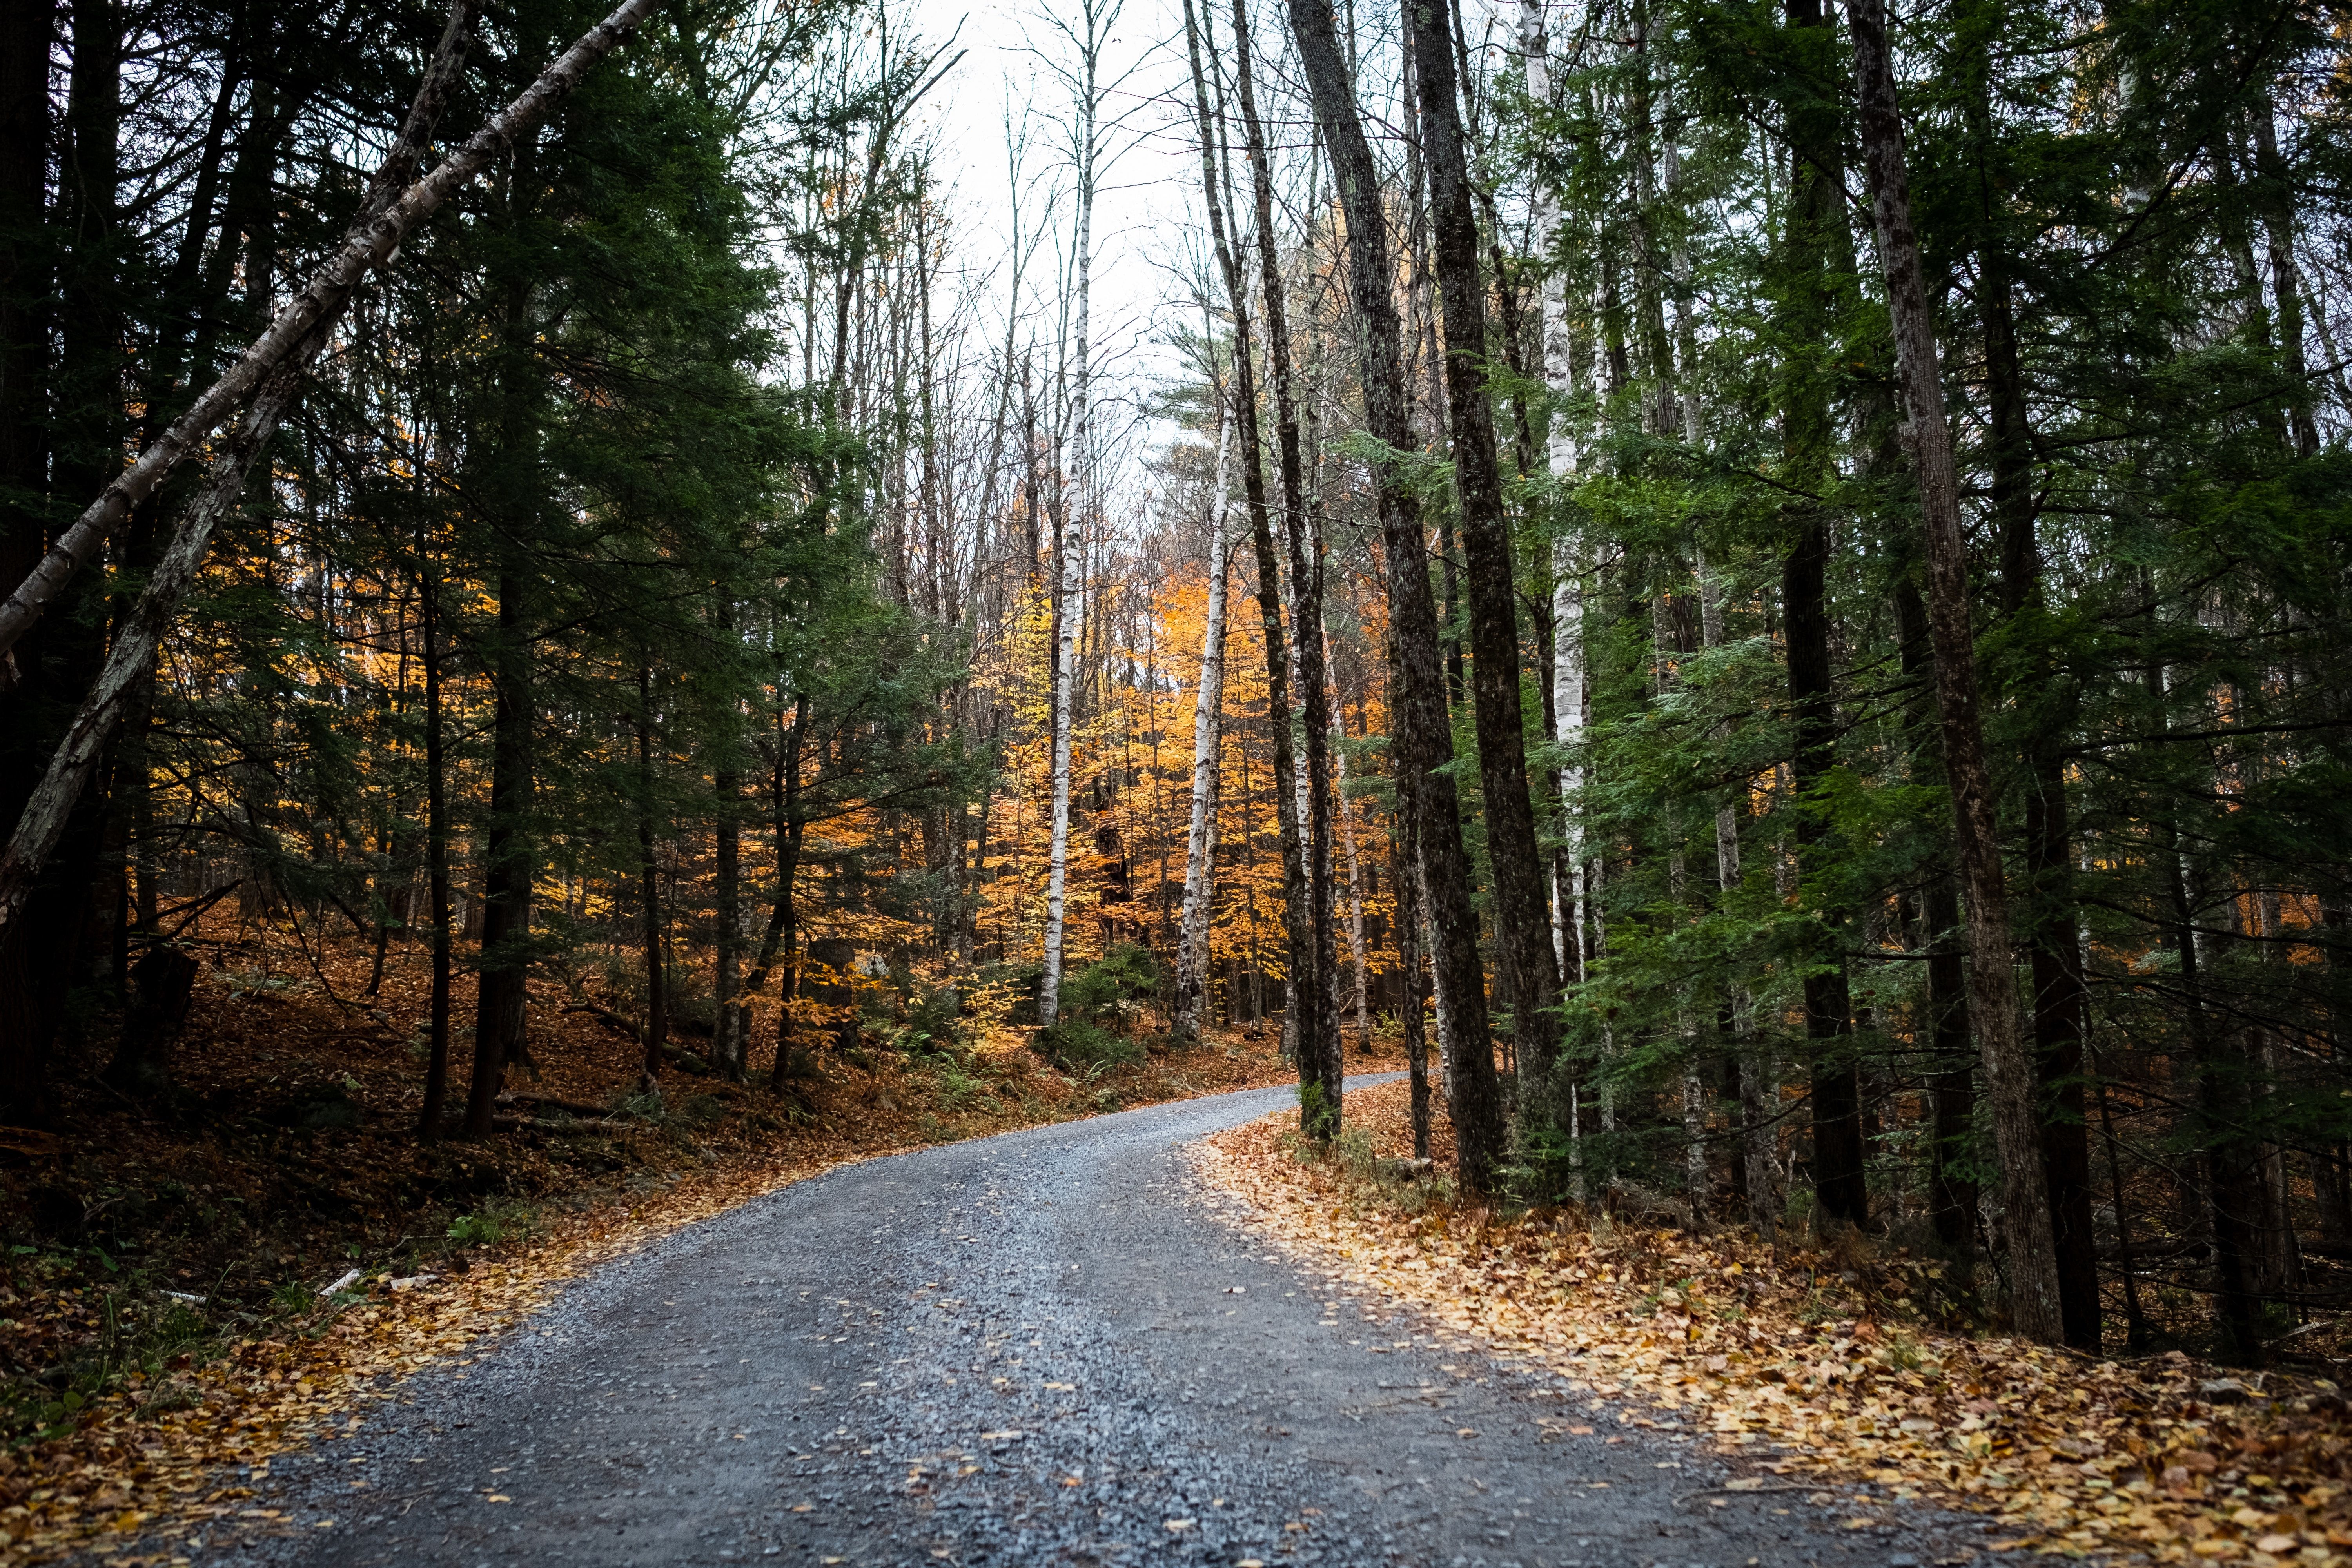 Trail with orange foliage in the Adirondack Mountains